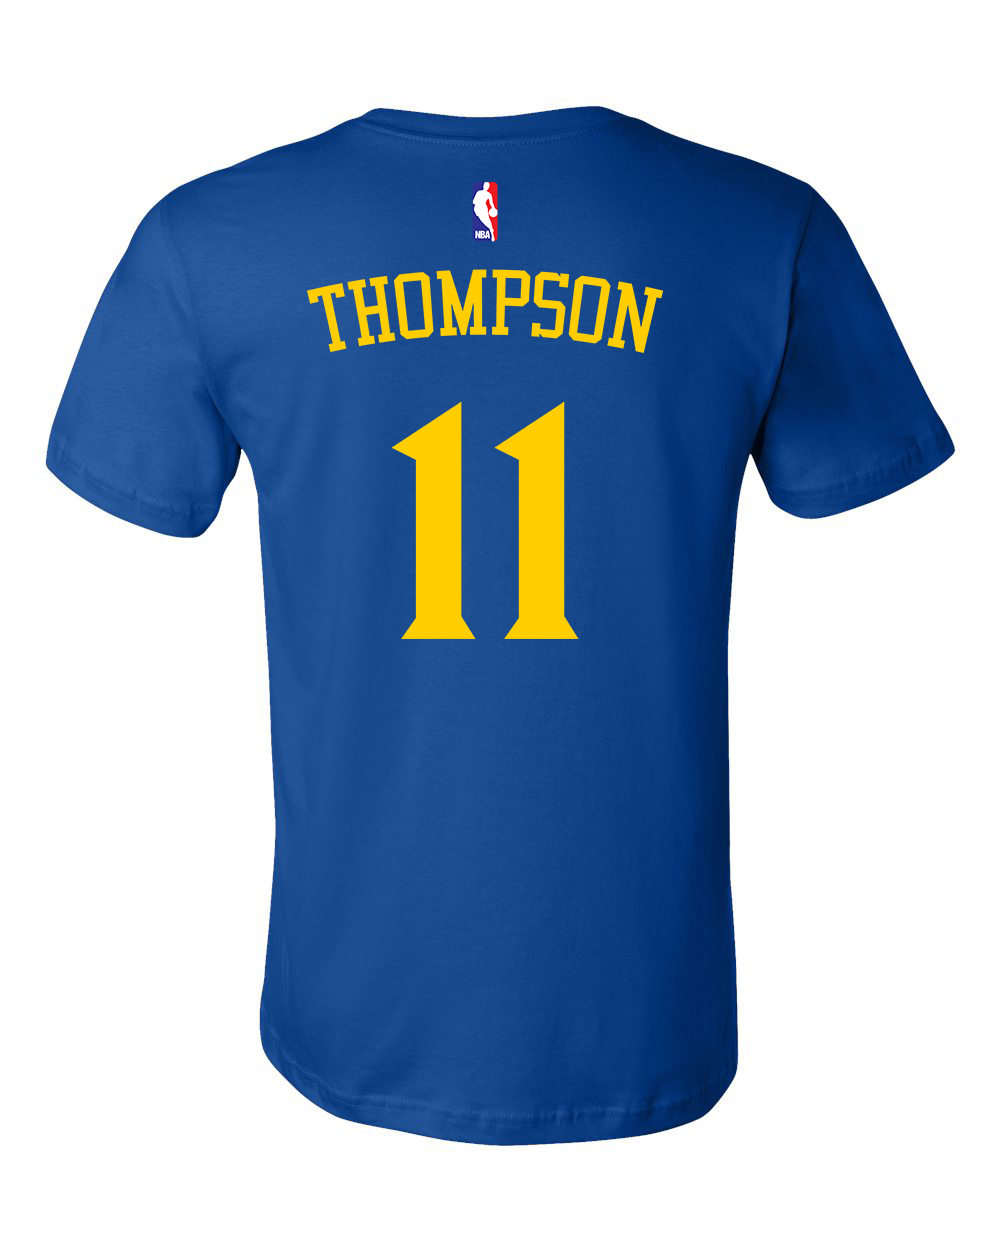 Klay Thompson Golden State Warriors Jerseys, Klay Thompson Shirts